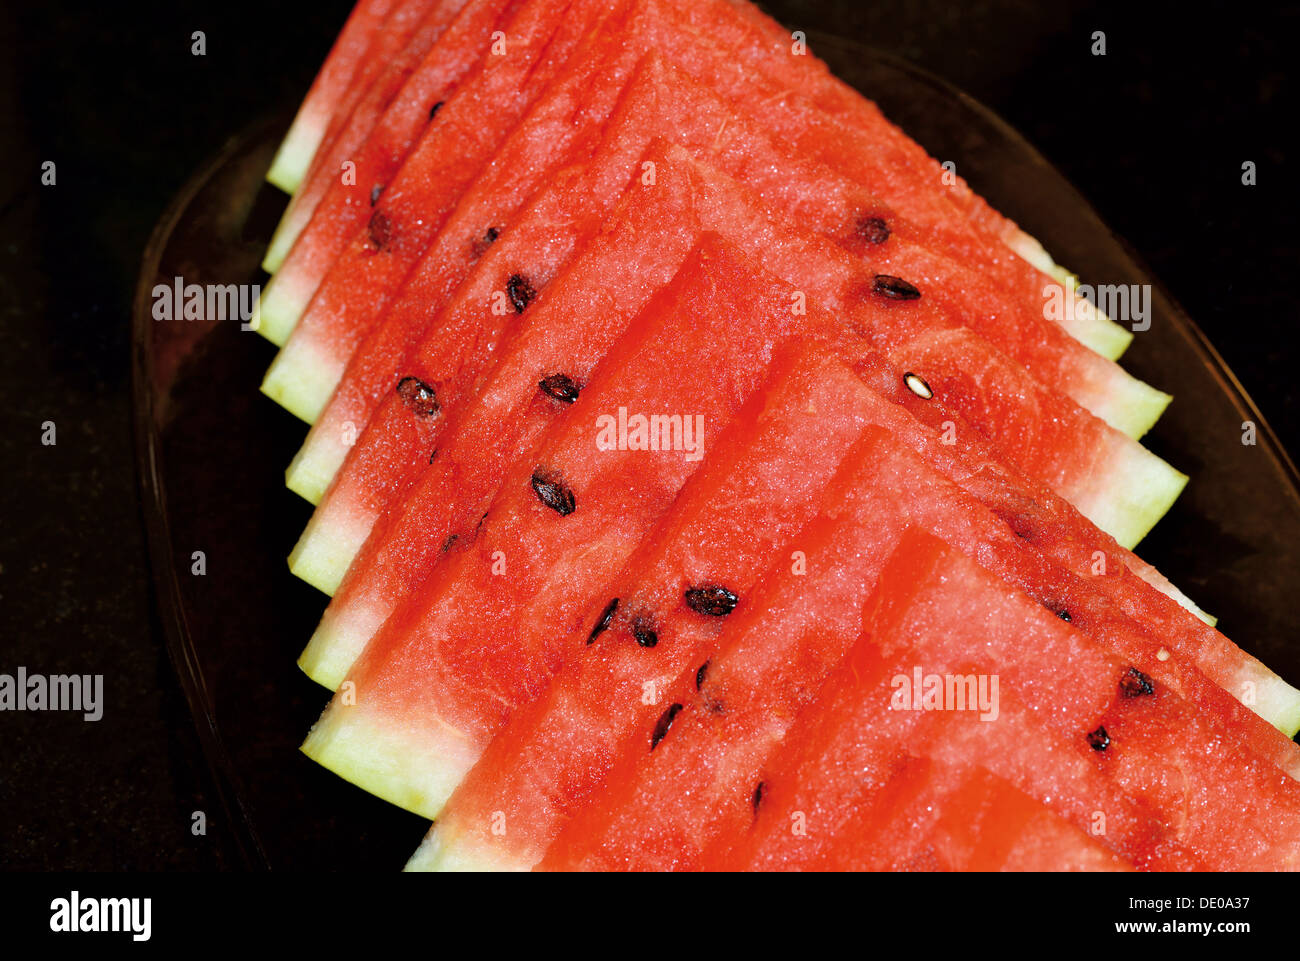 Brazil: Fresh water melon slices Stock Photo